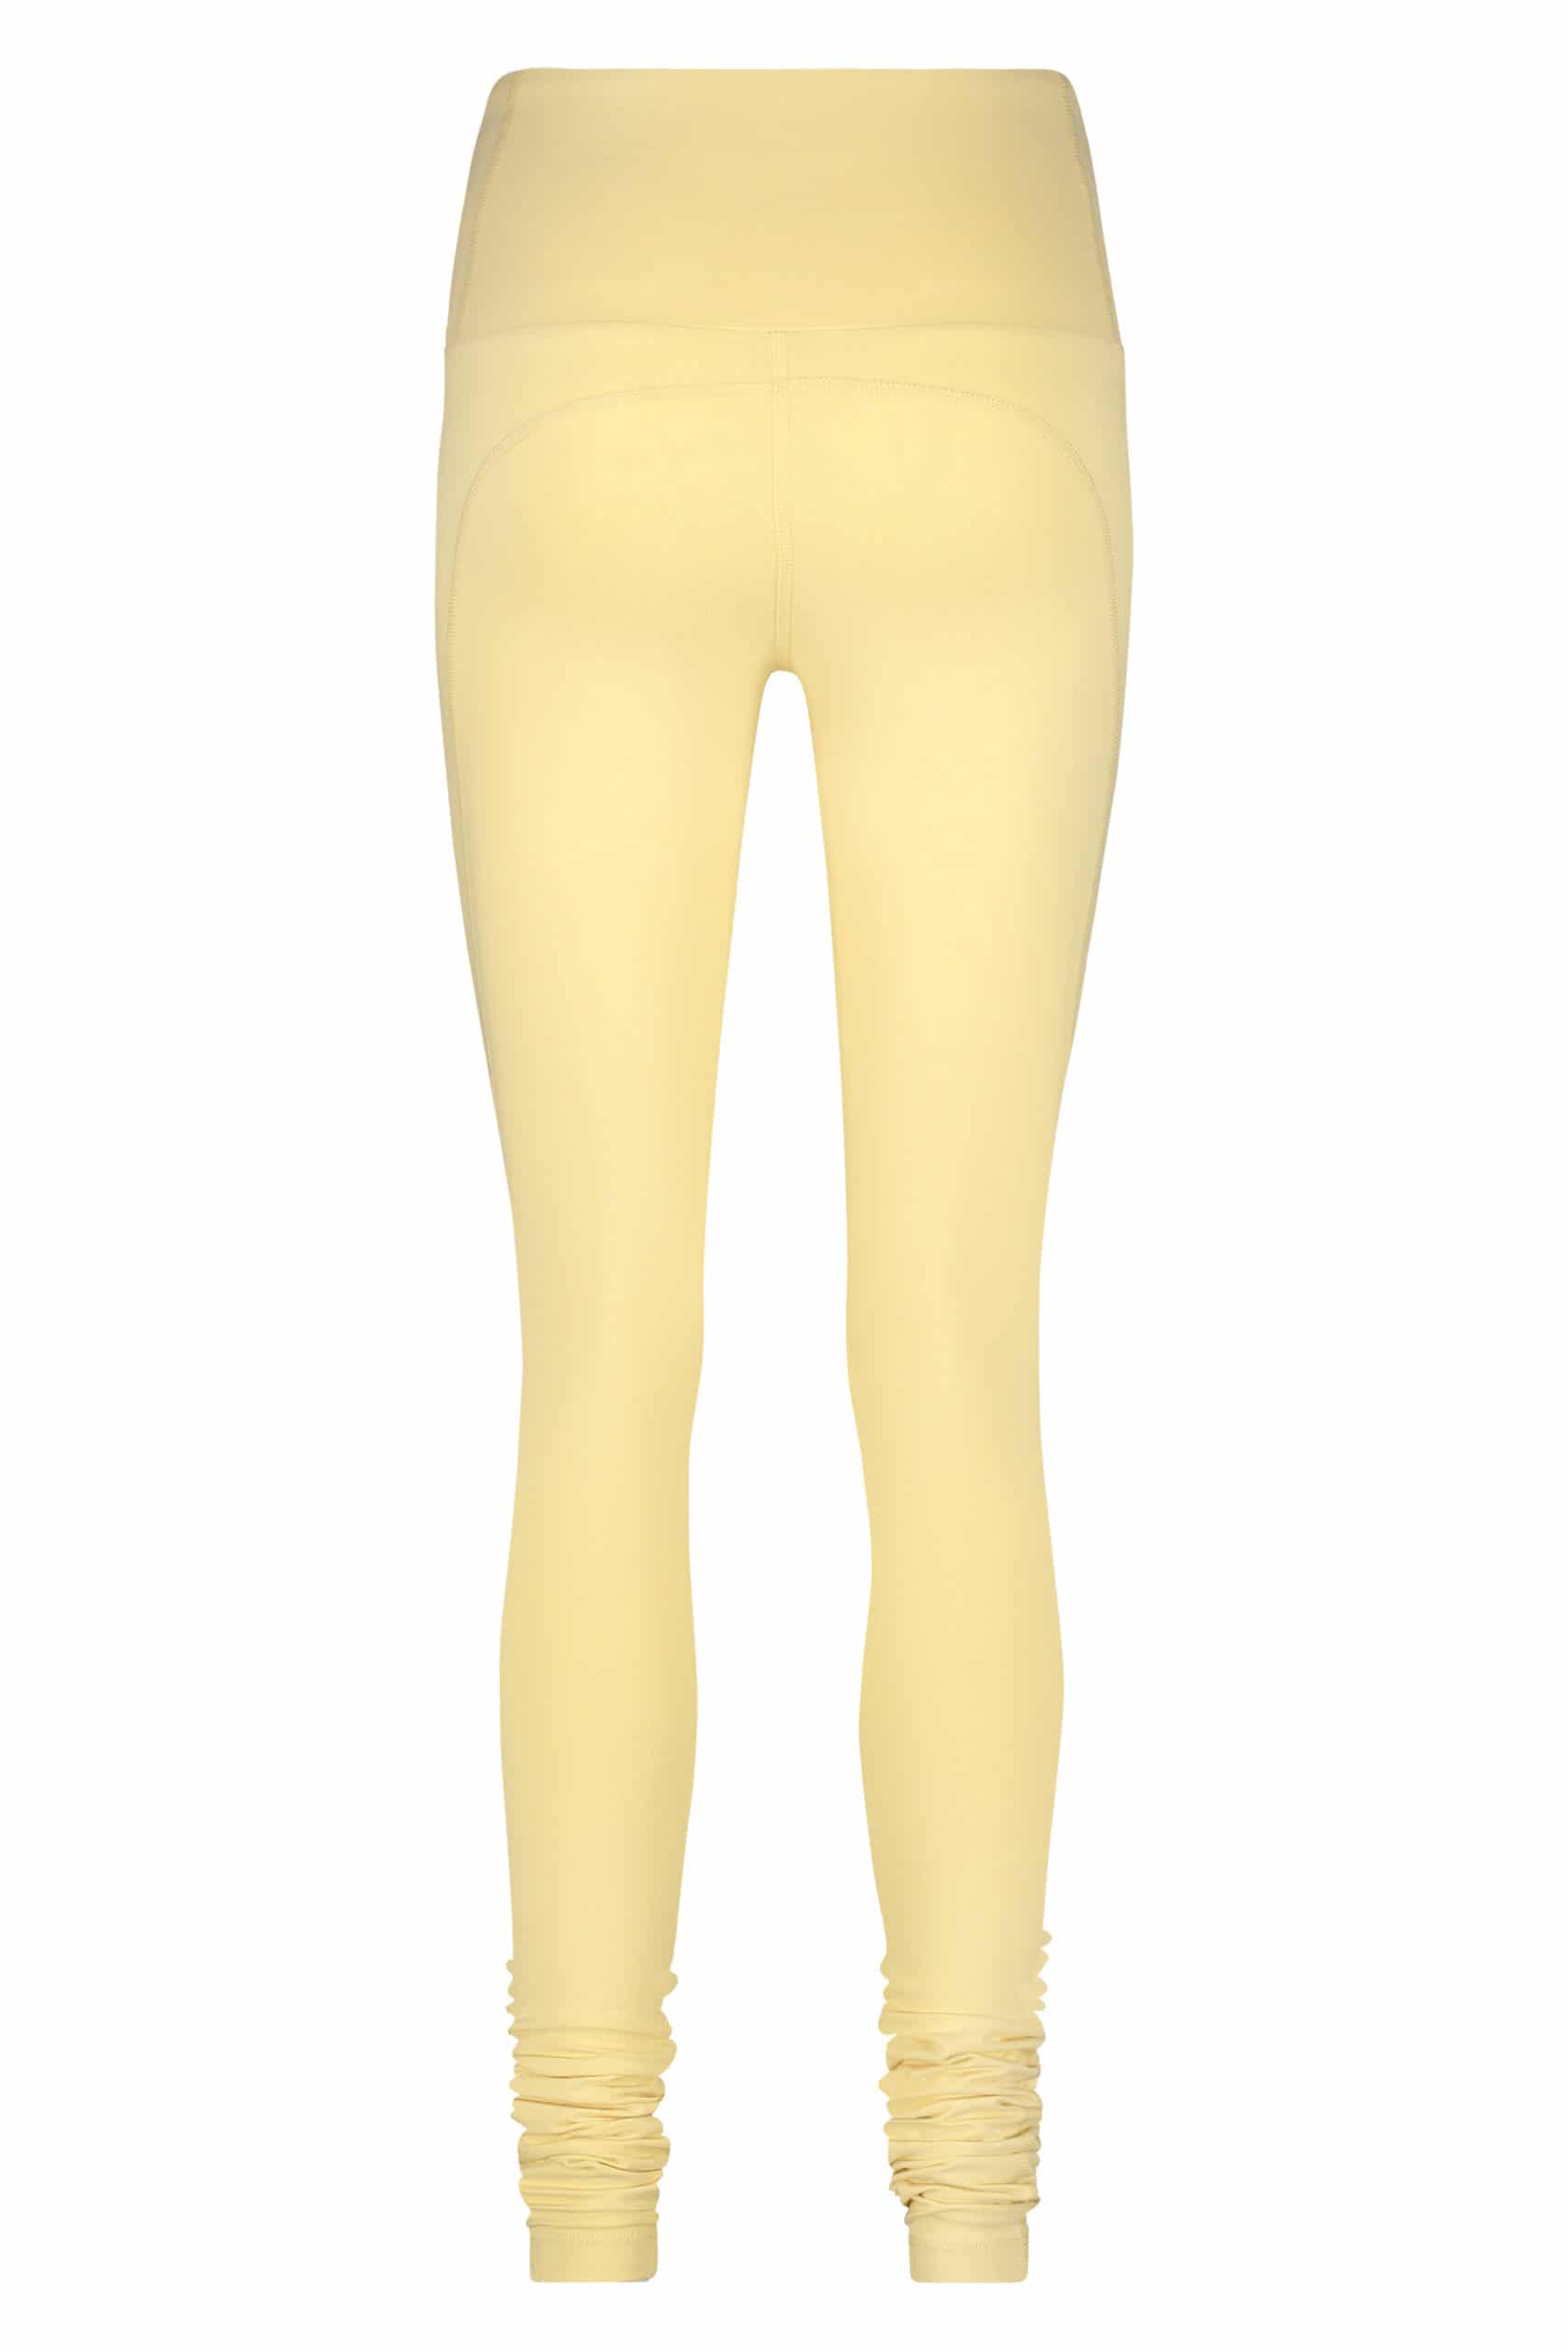 High Waist Gaia Yoga Leggings in blassgelber Farbe honeysuckle - Ausschnitt hinten